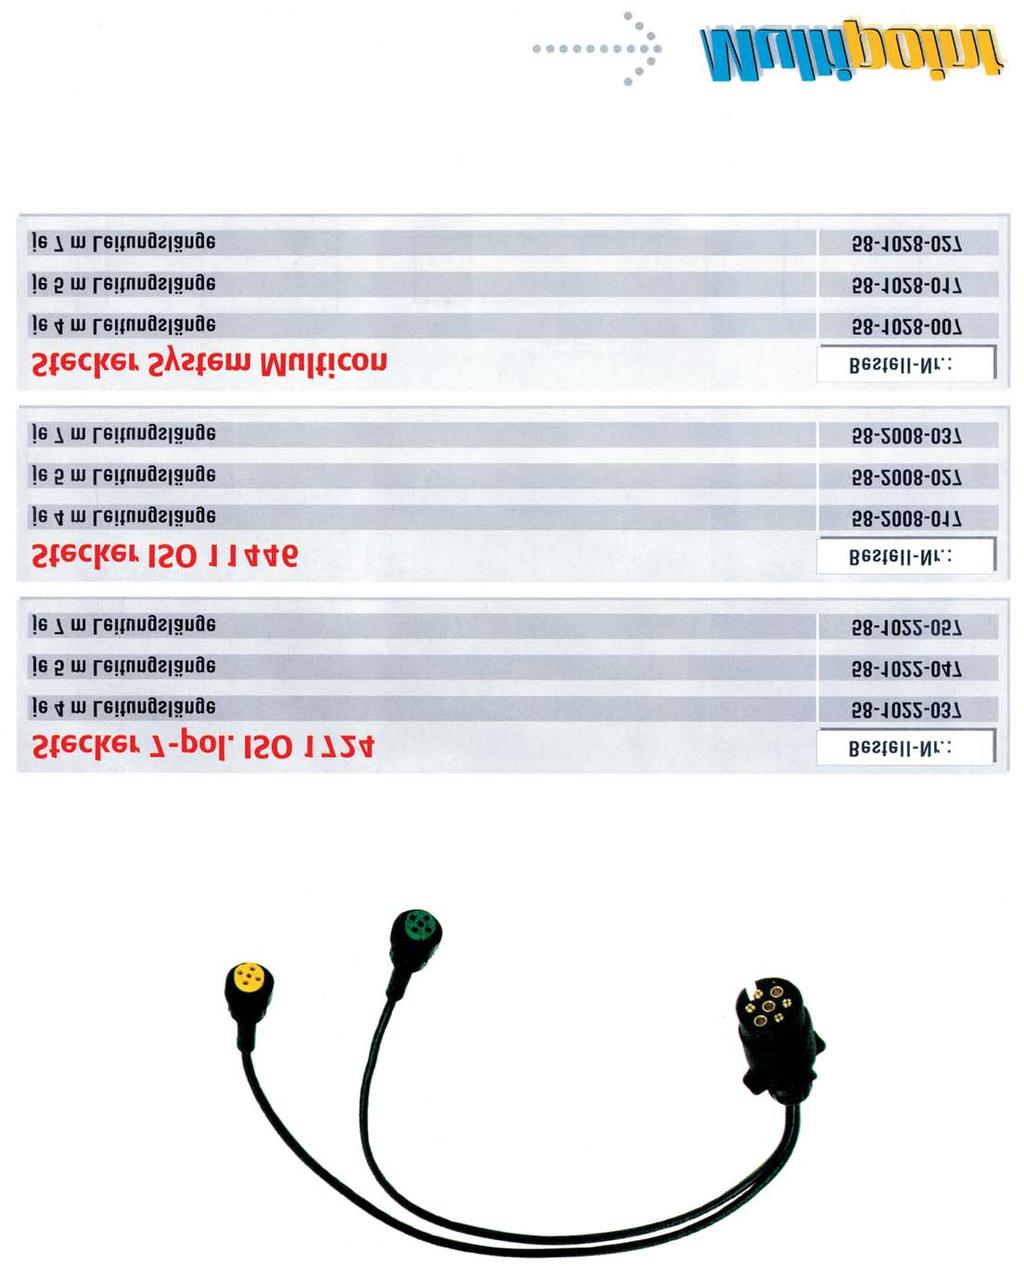 7-polno grlo ISO 1724 Za kabel od 4m Za kabel od 5m Za kabel od 7m 58-1022-037 58-1022-047 58-1022-057 Grlo ISO 11446 Za kabel od 4m Za kabel od 5m Za